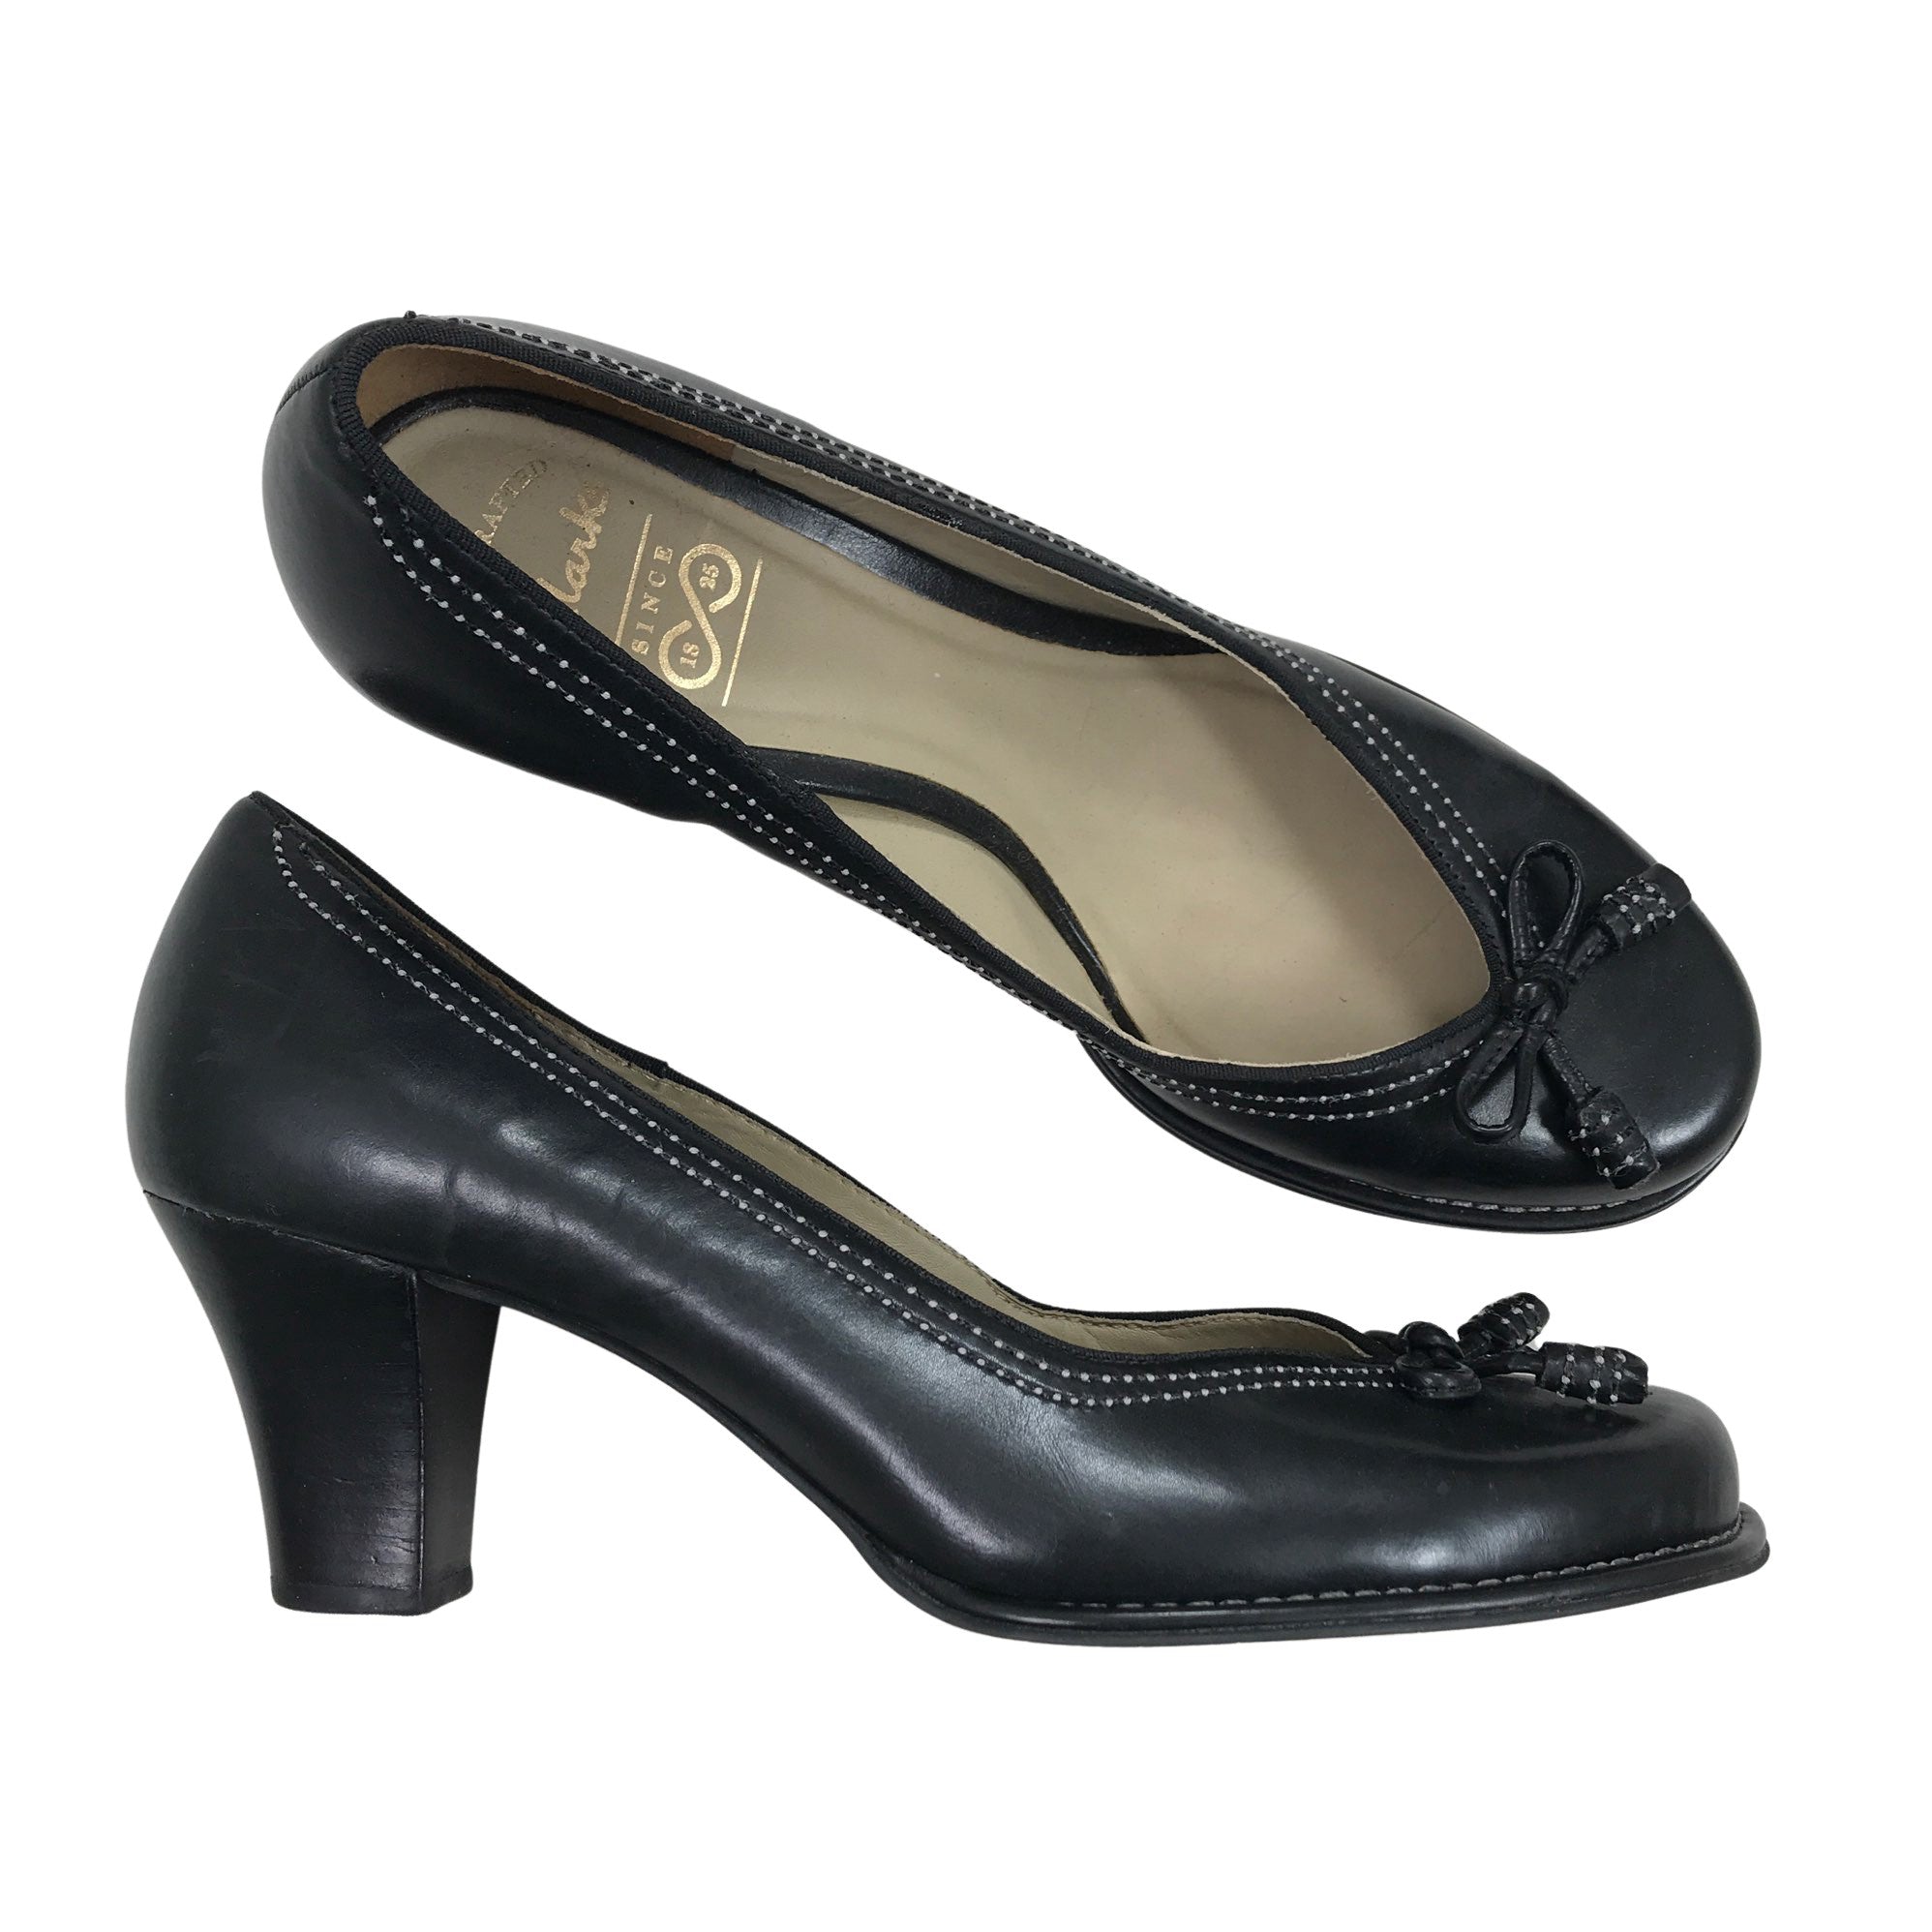 Clarks High heels, size 41 (Black) | Emmy